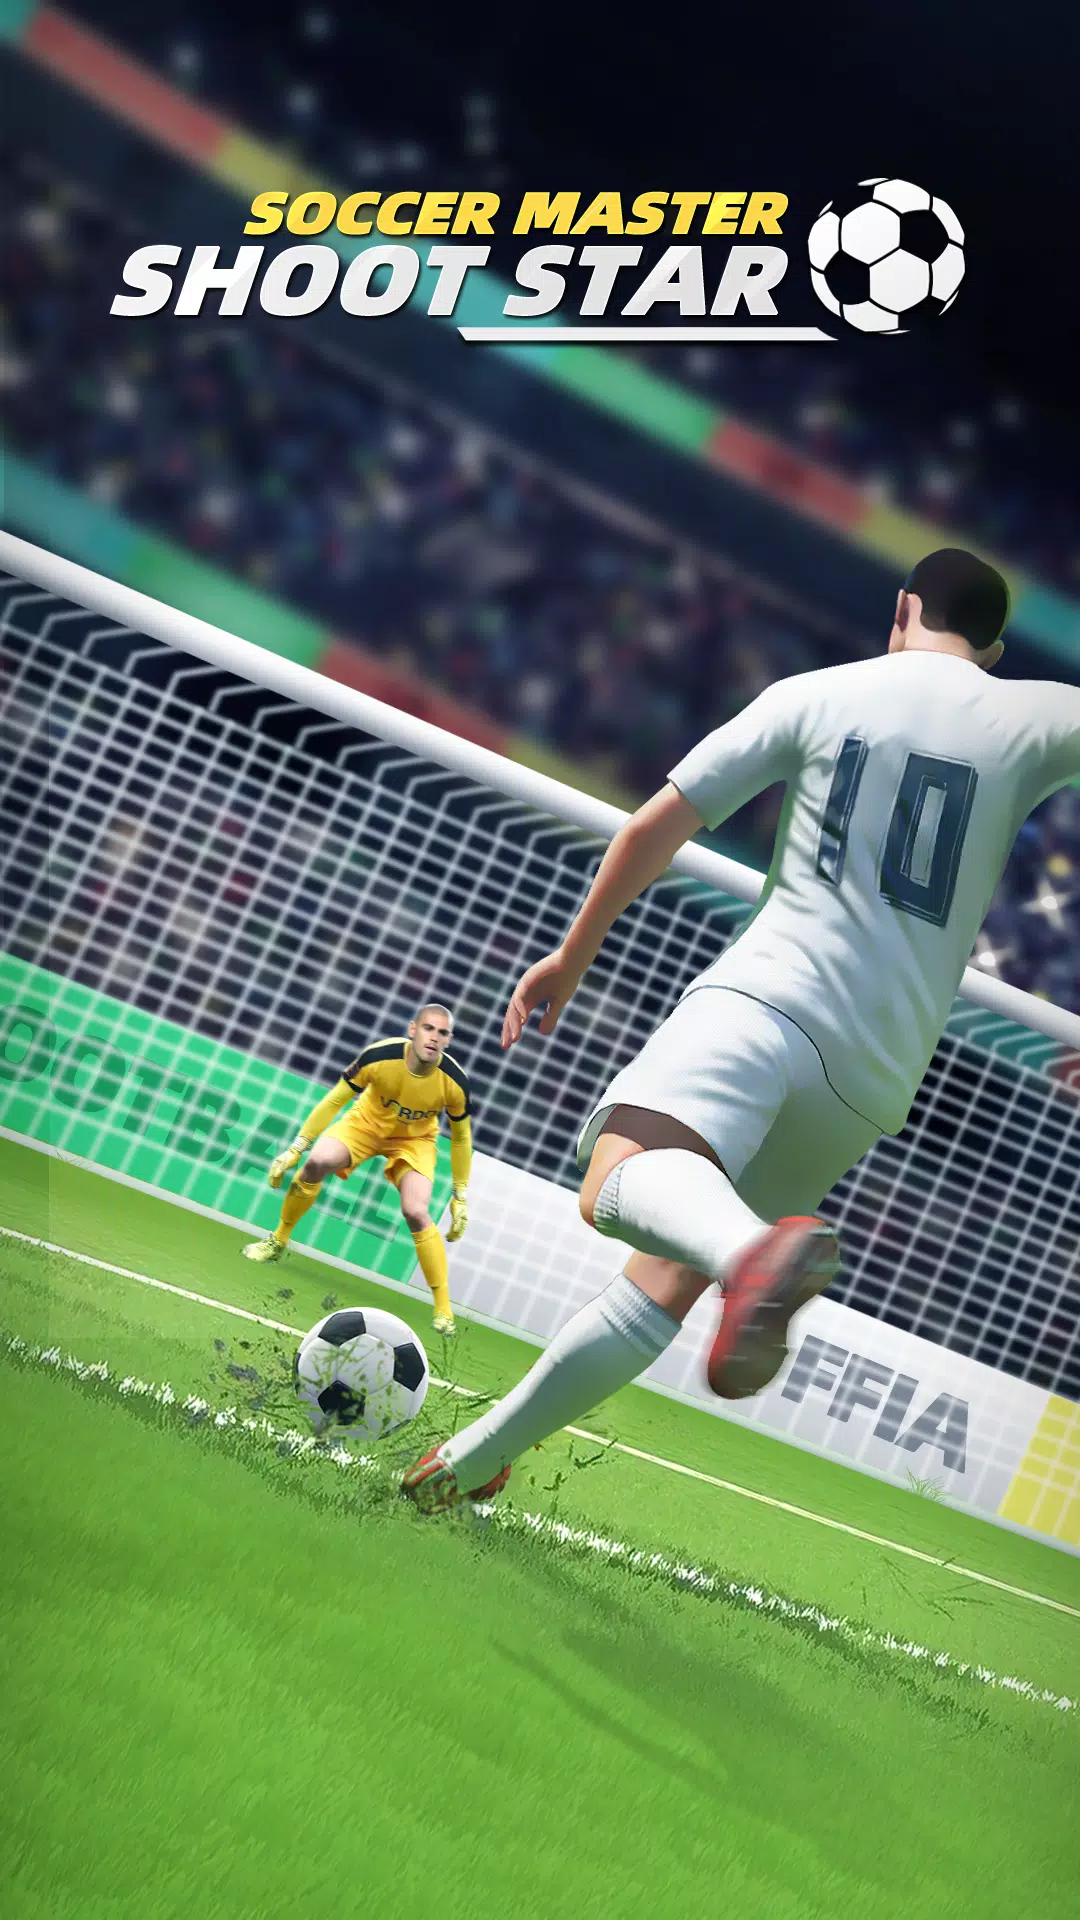 Soccer Star APK v2.15.1 Free Download - APK4Fun